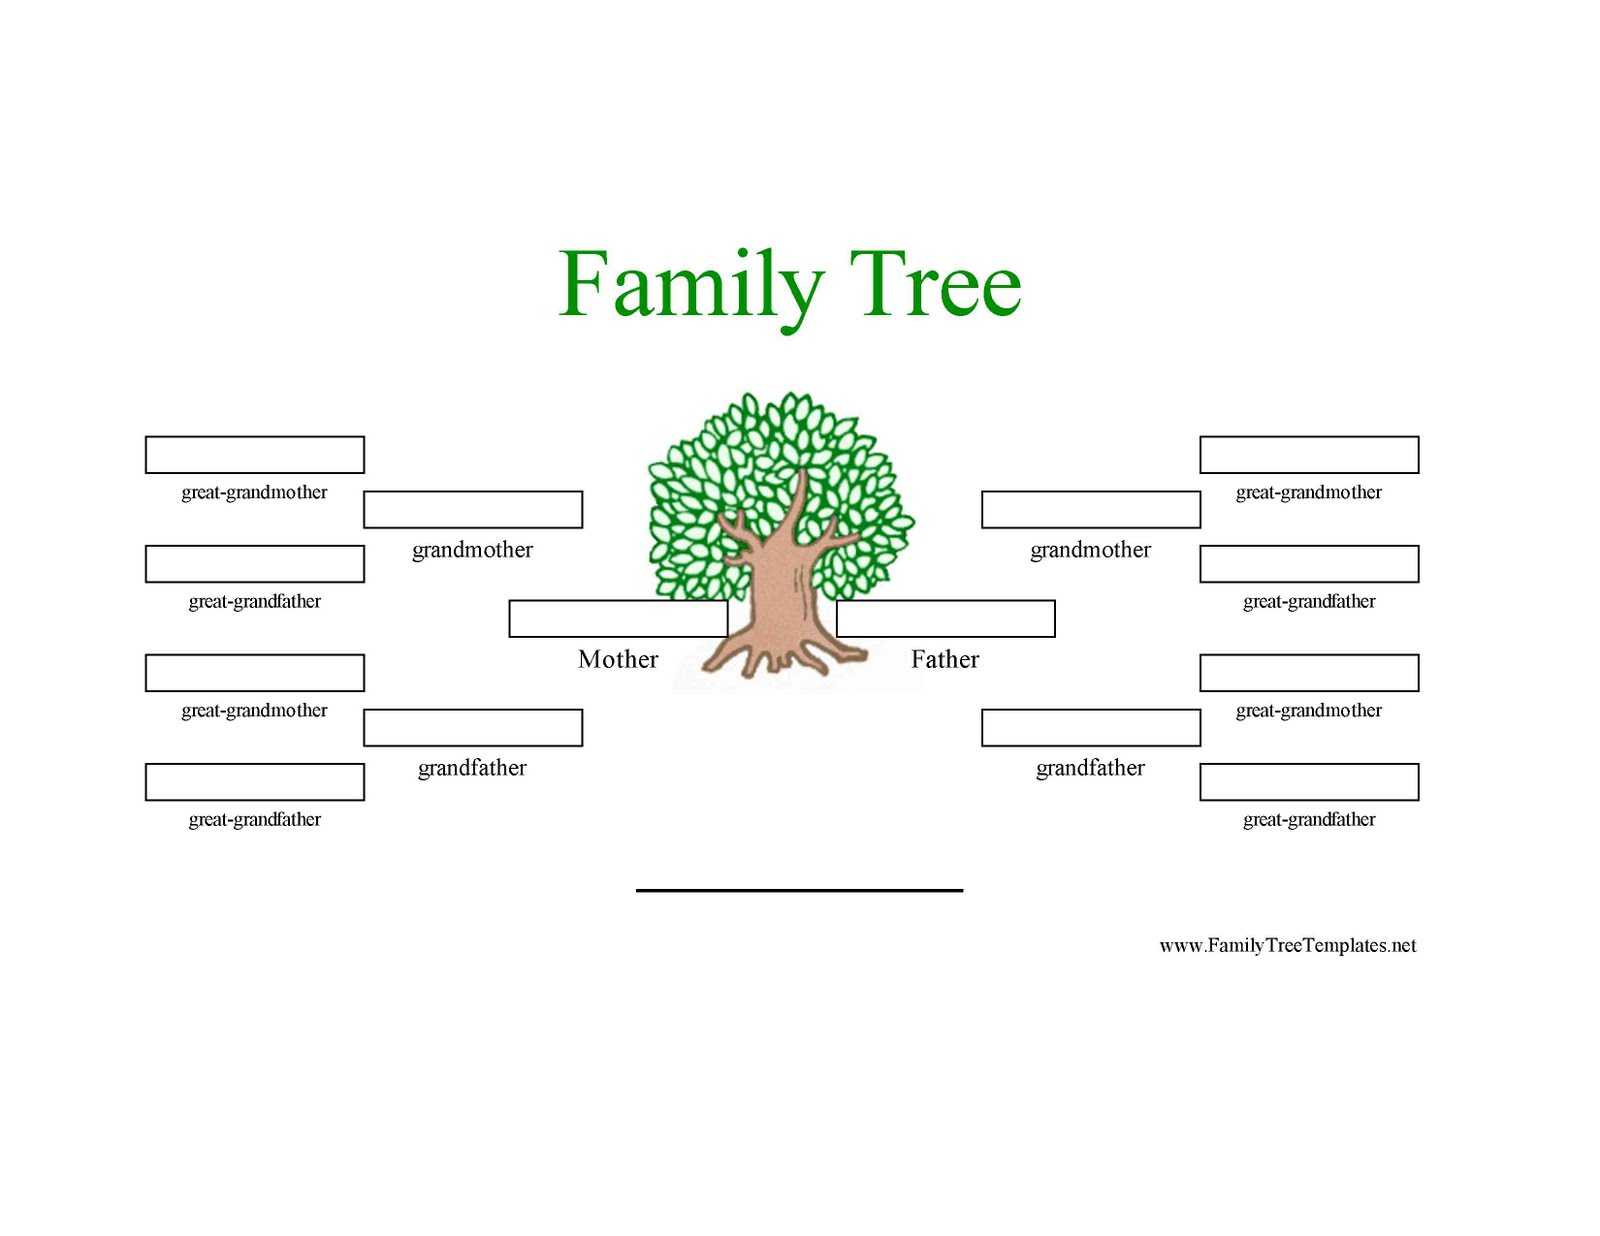 Family Tree Template: Family Tree Template Three Generation Regarding Blank Family Tree Template 3 Generations